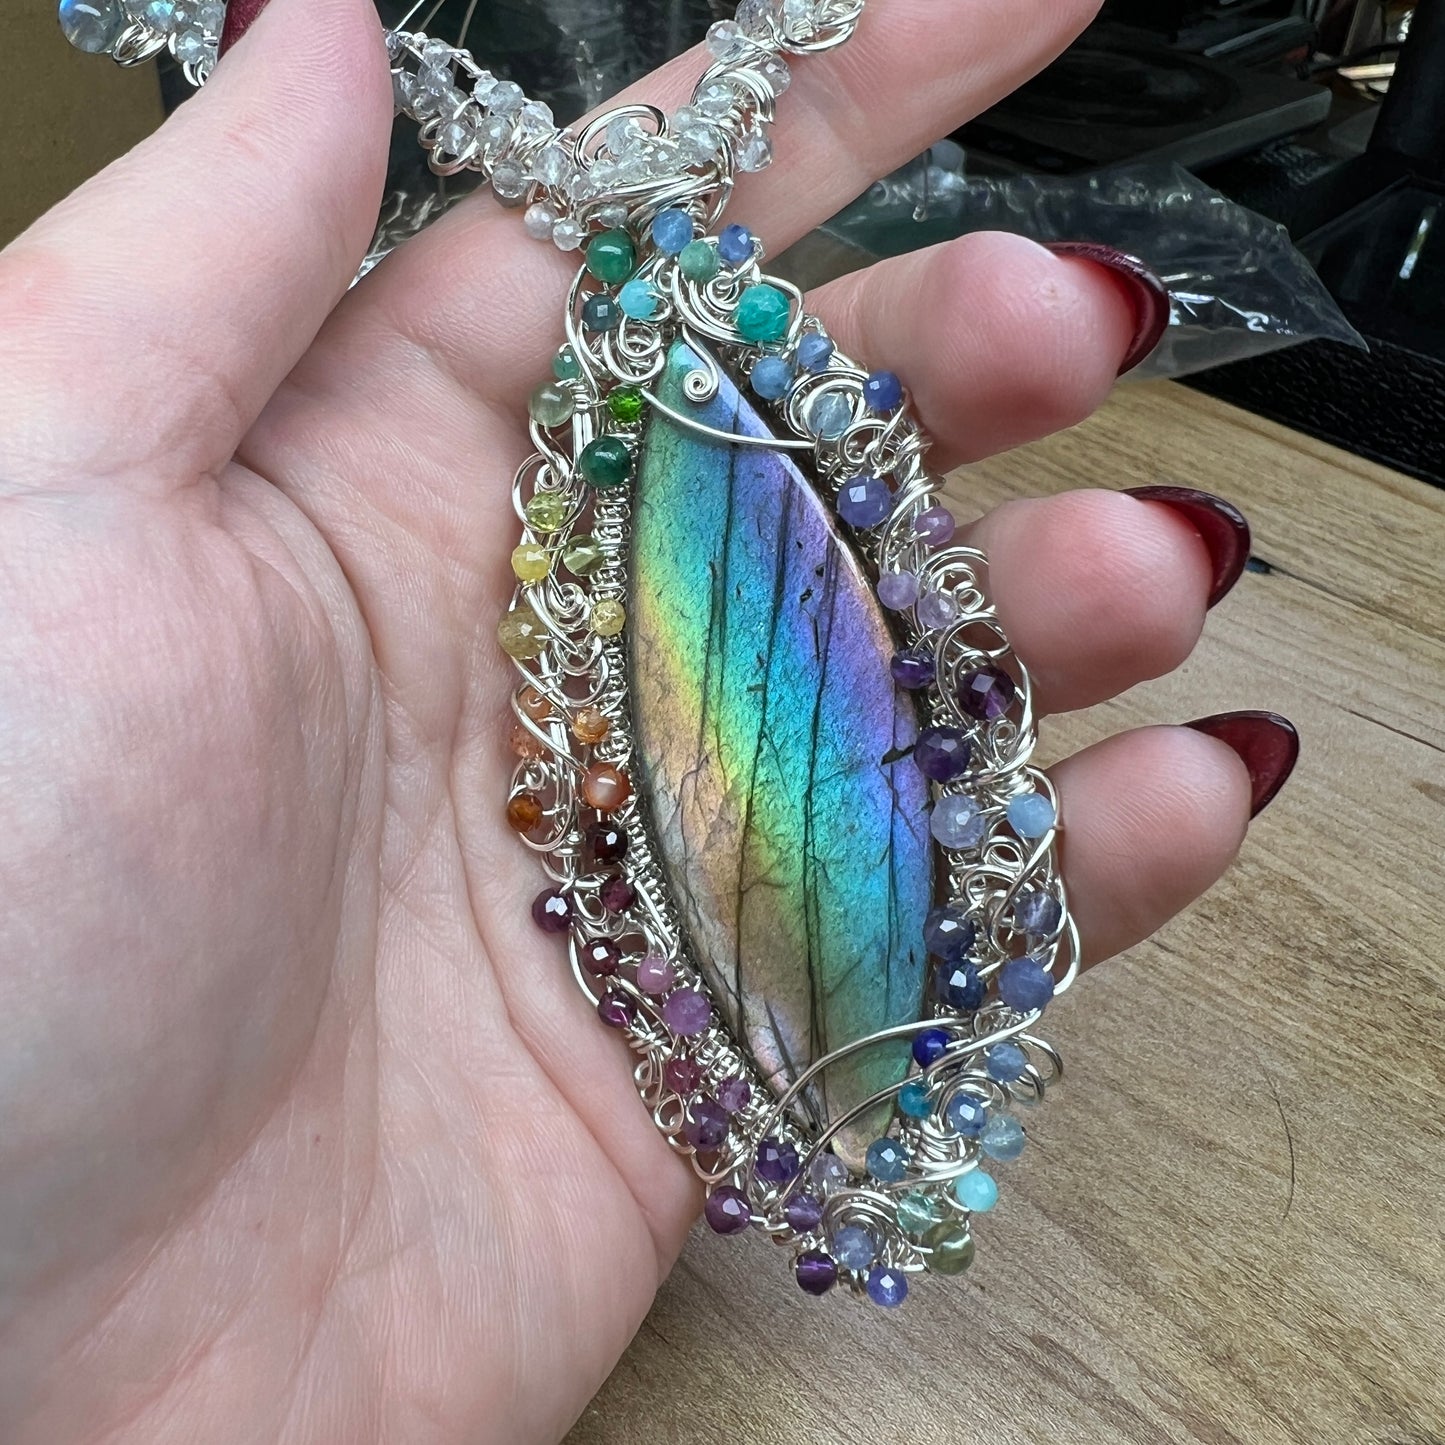 The Glorious Rainbow Labradorite Necklace